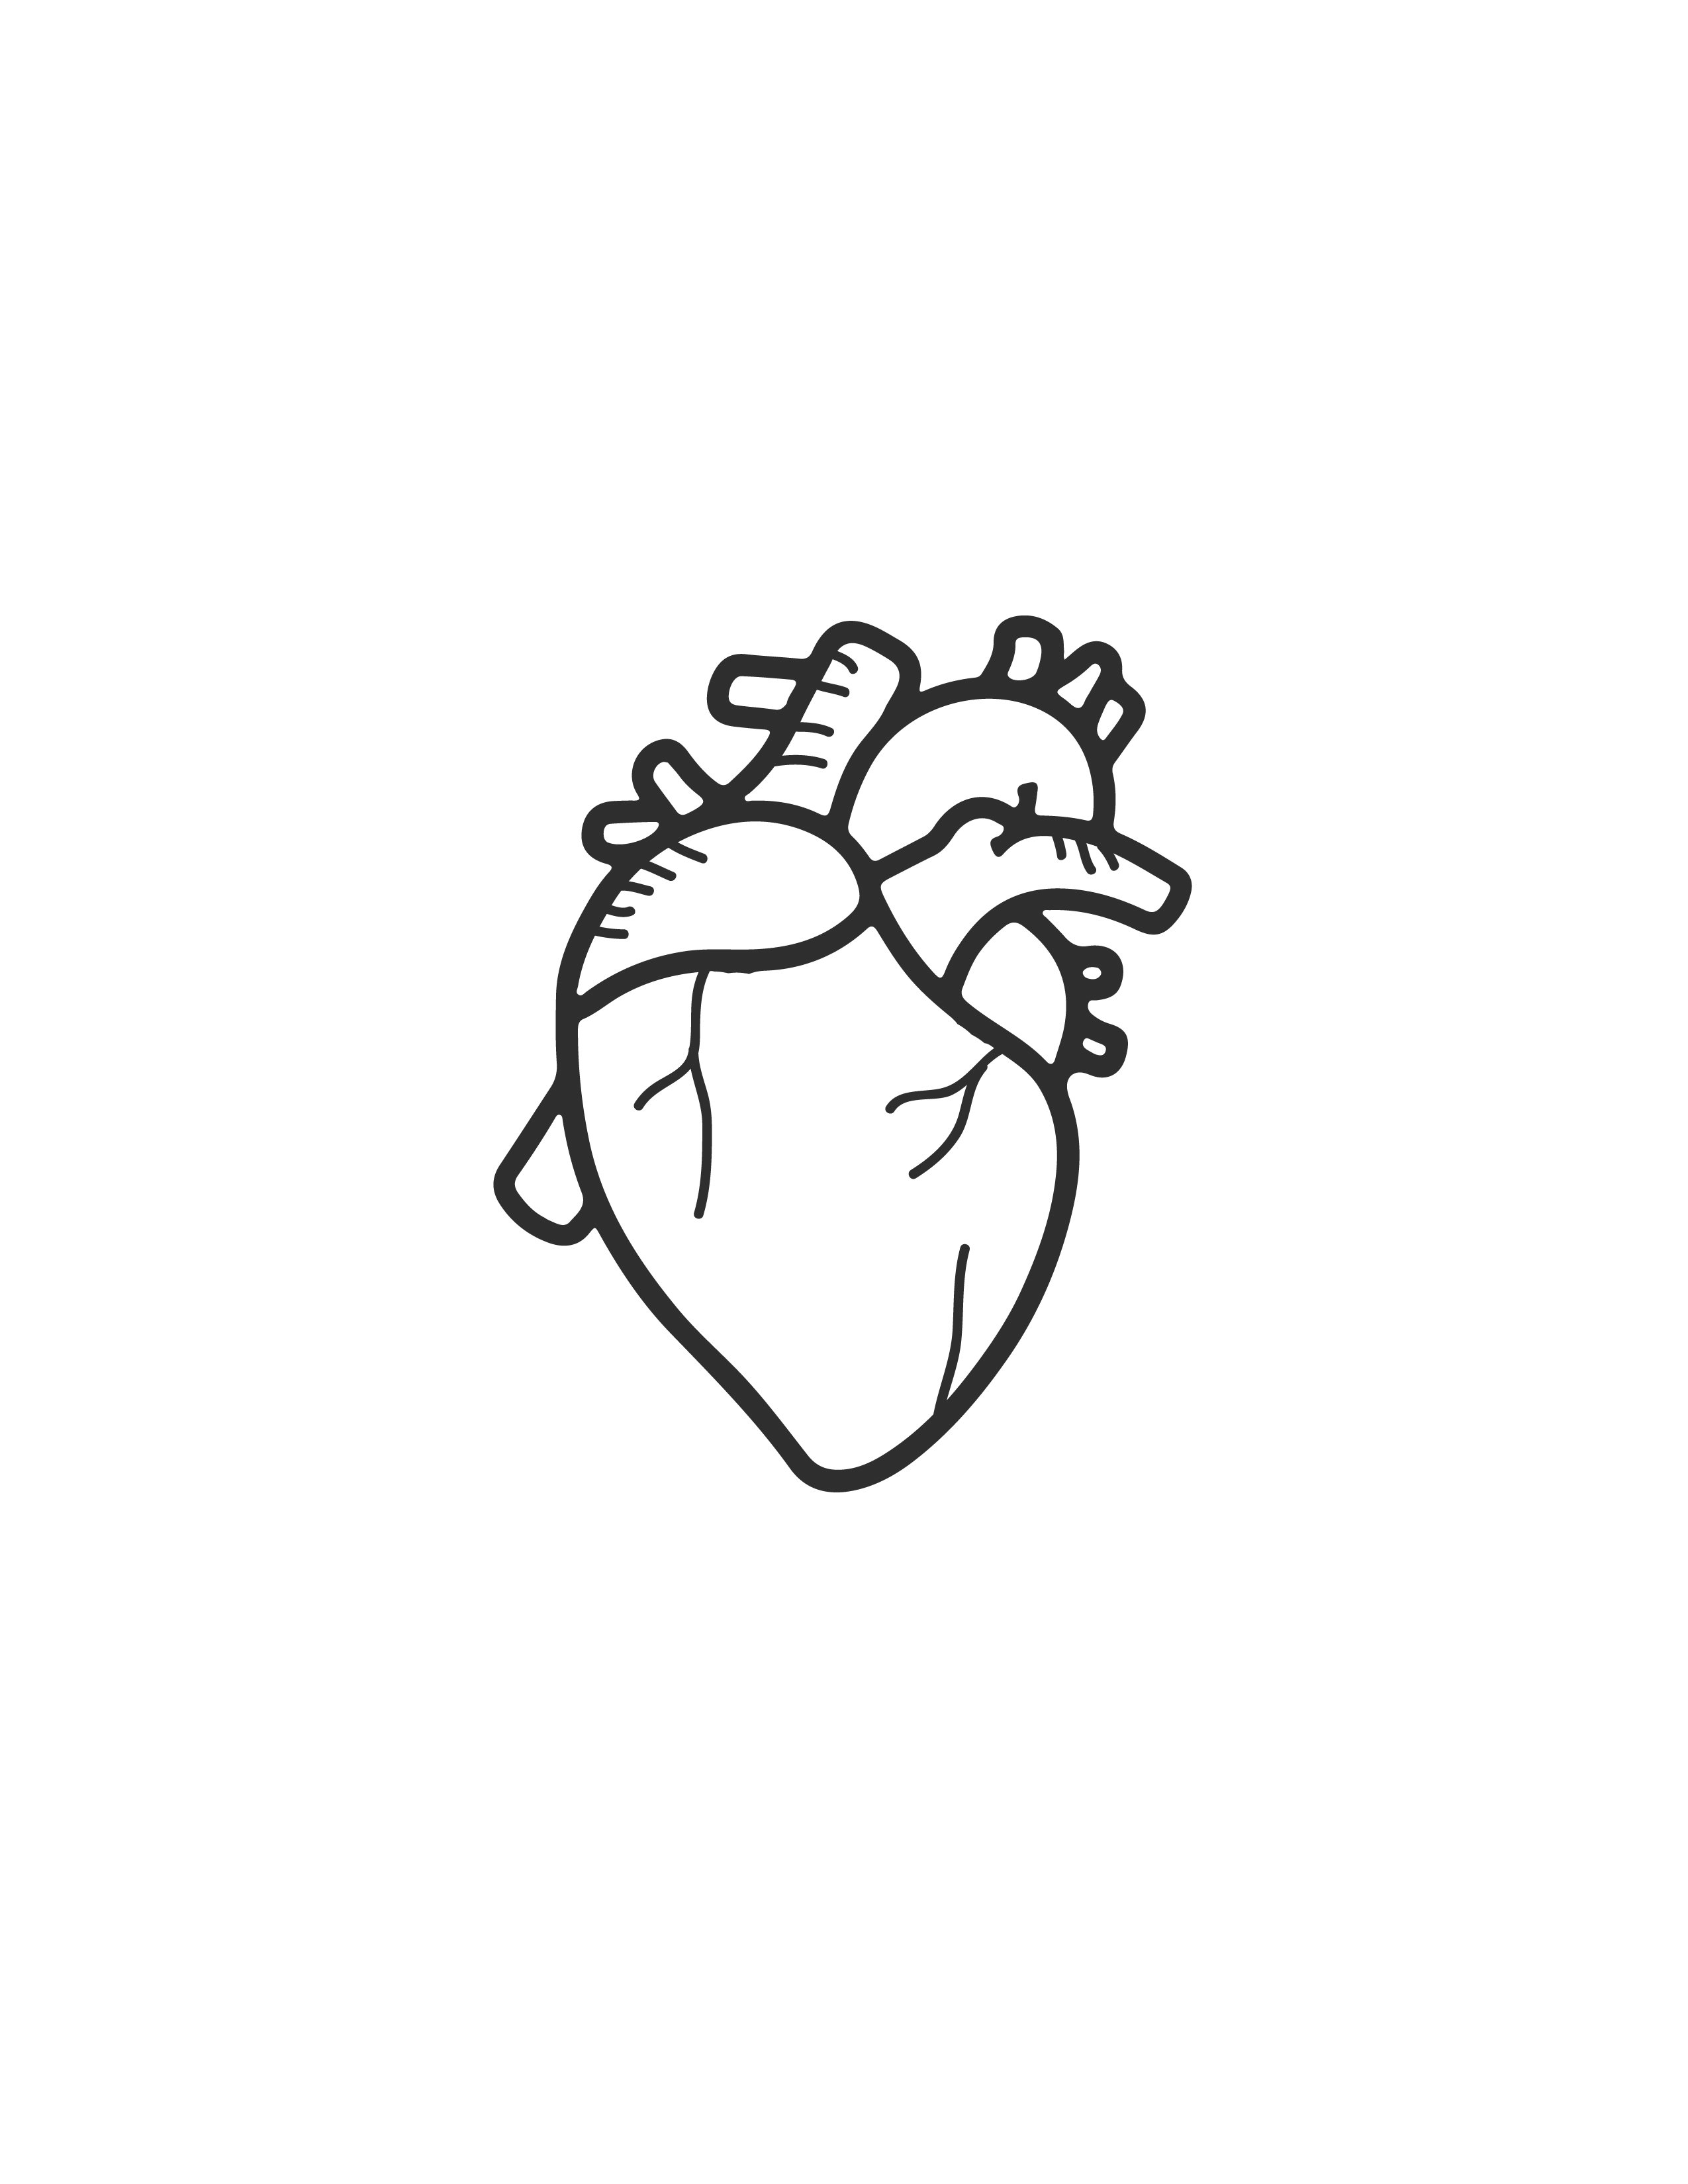 human heart sketches